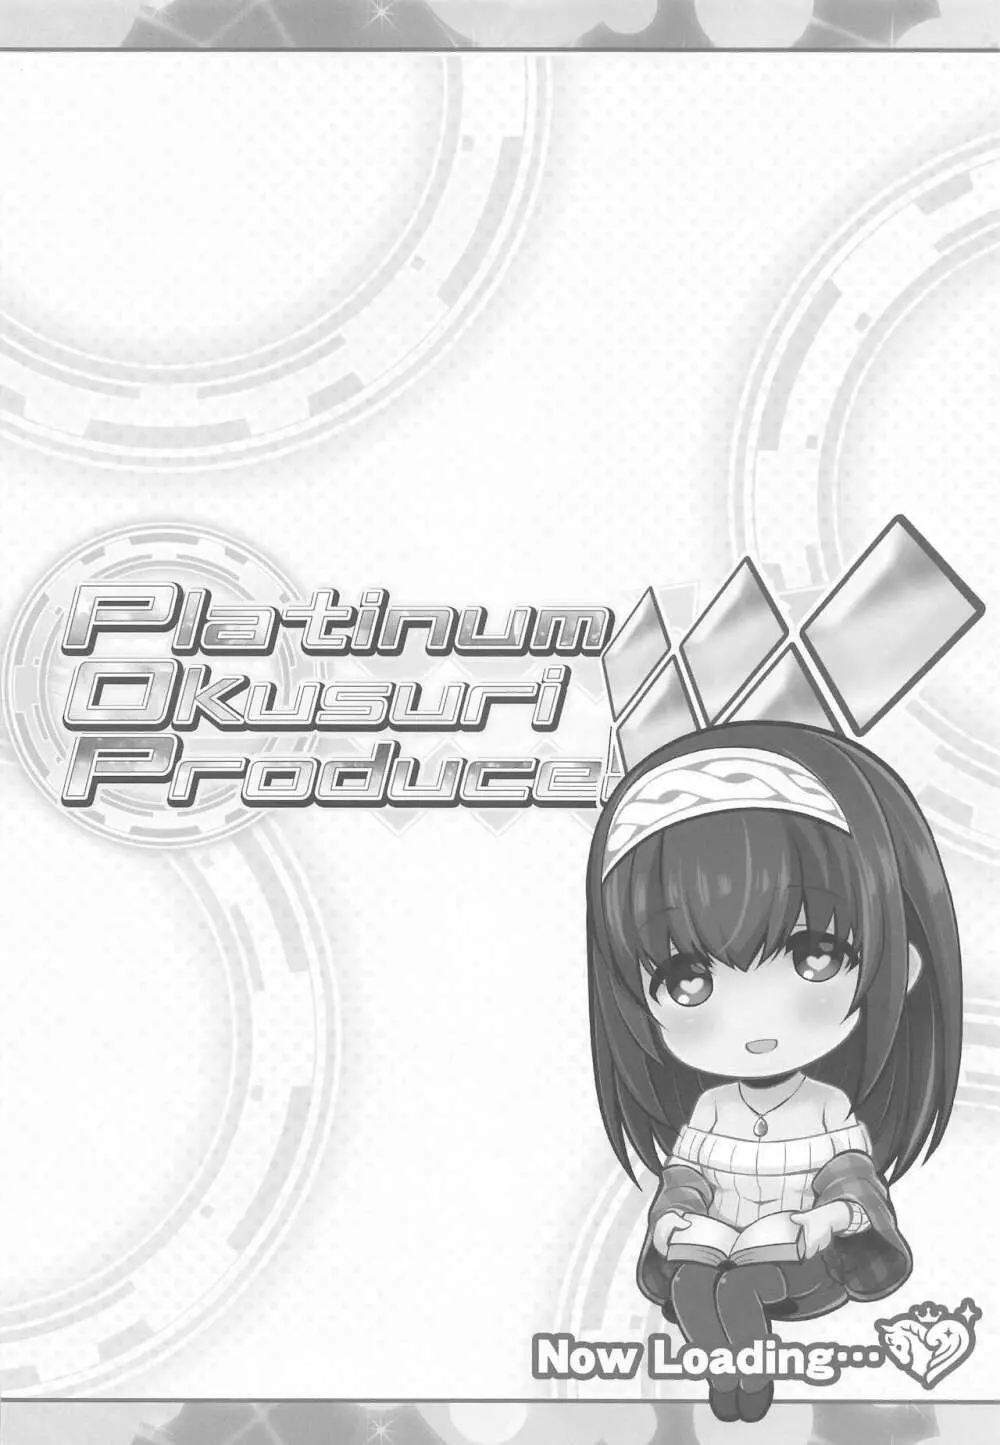 Platinum Okusuri Produce!!!! ◇◇◇◇◇ 3ページ